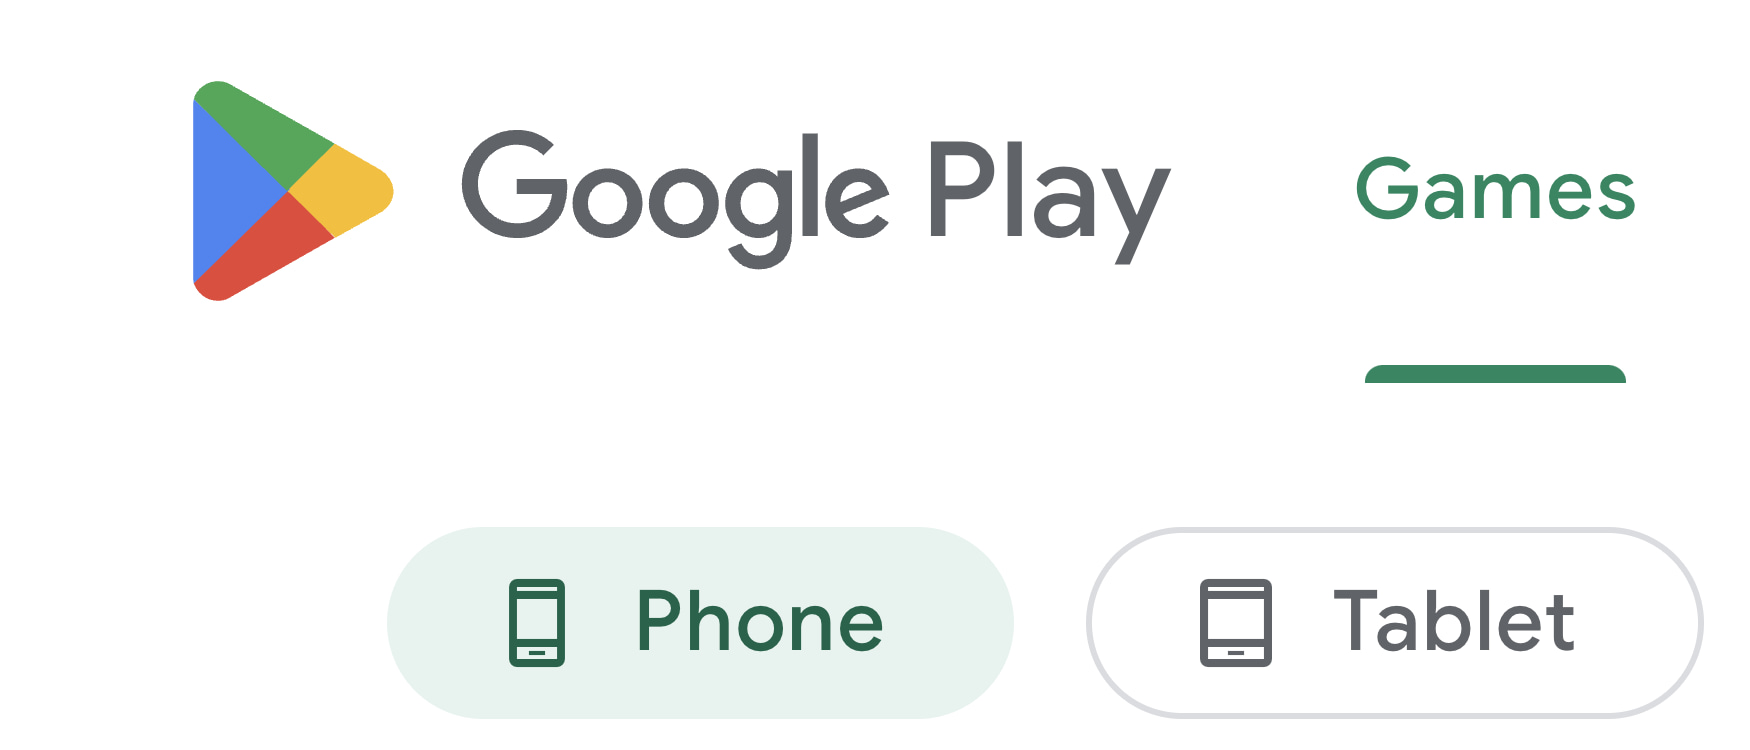 Google play 2022